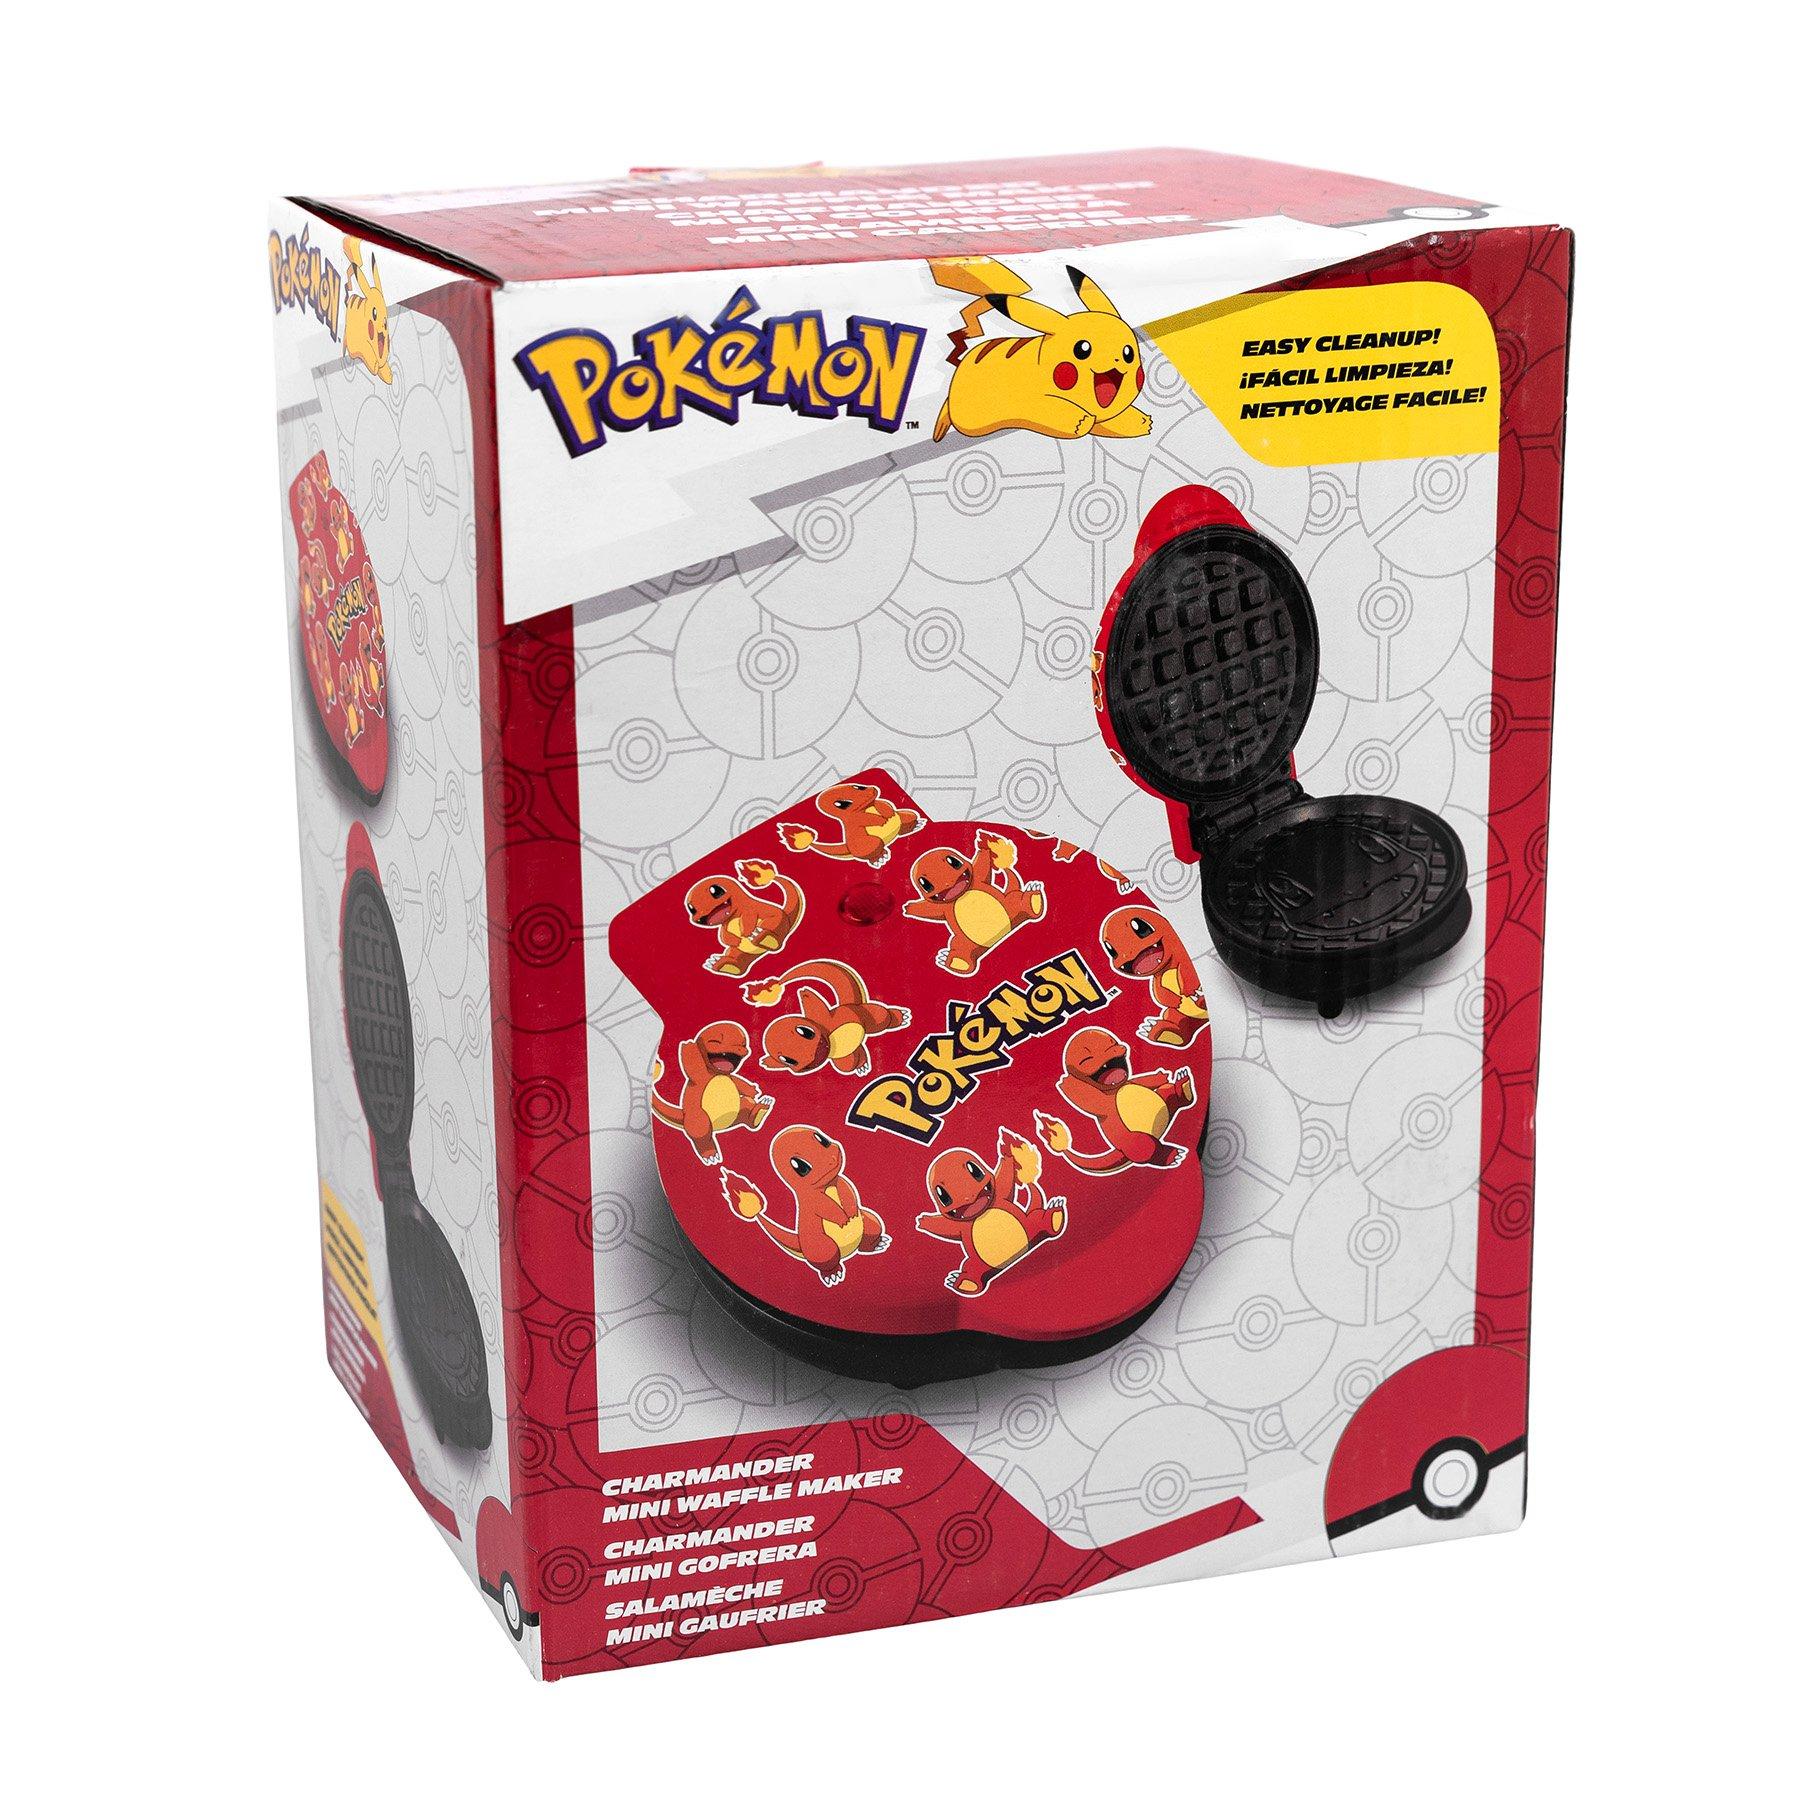 https://media.gamestop.com/i/gamestop/20004230_ALT04/Pokemon-Charmander-Mini-Waffle-Maker-GameStop-Exclusive?$pdp$